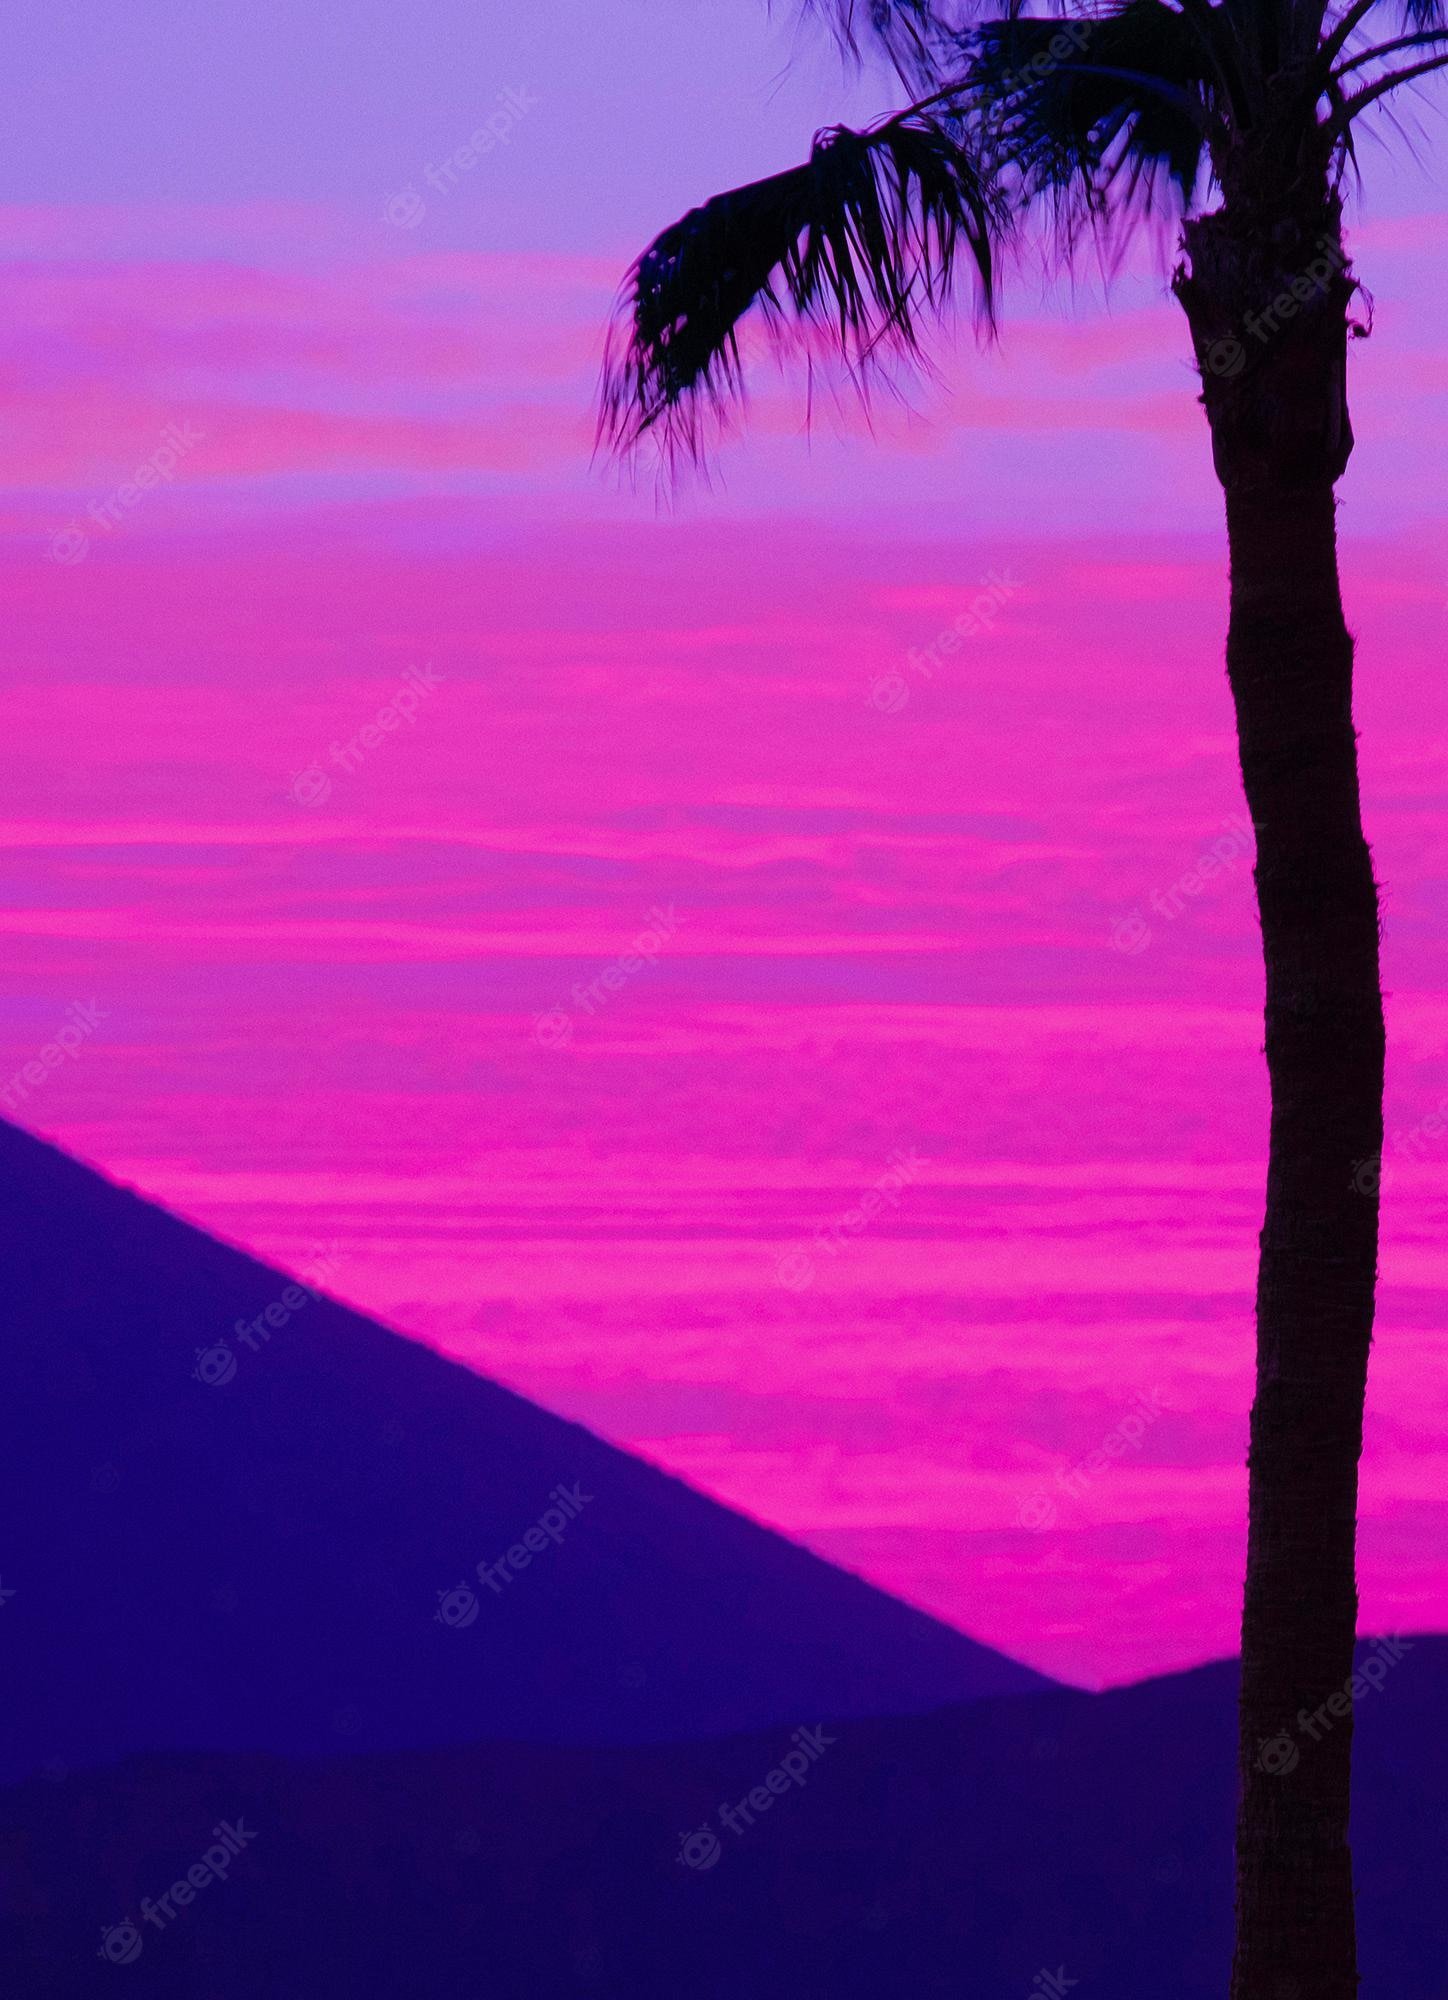 Premium Photo. Purple minimalistic sunrise. shadow palm trees and unicorn pink sky. relax wallpaper